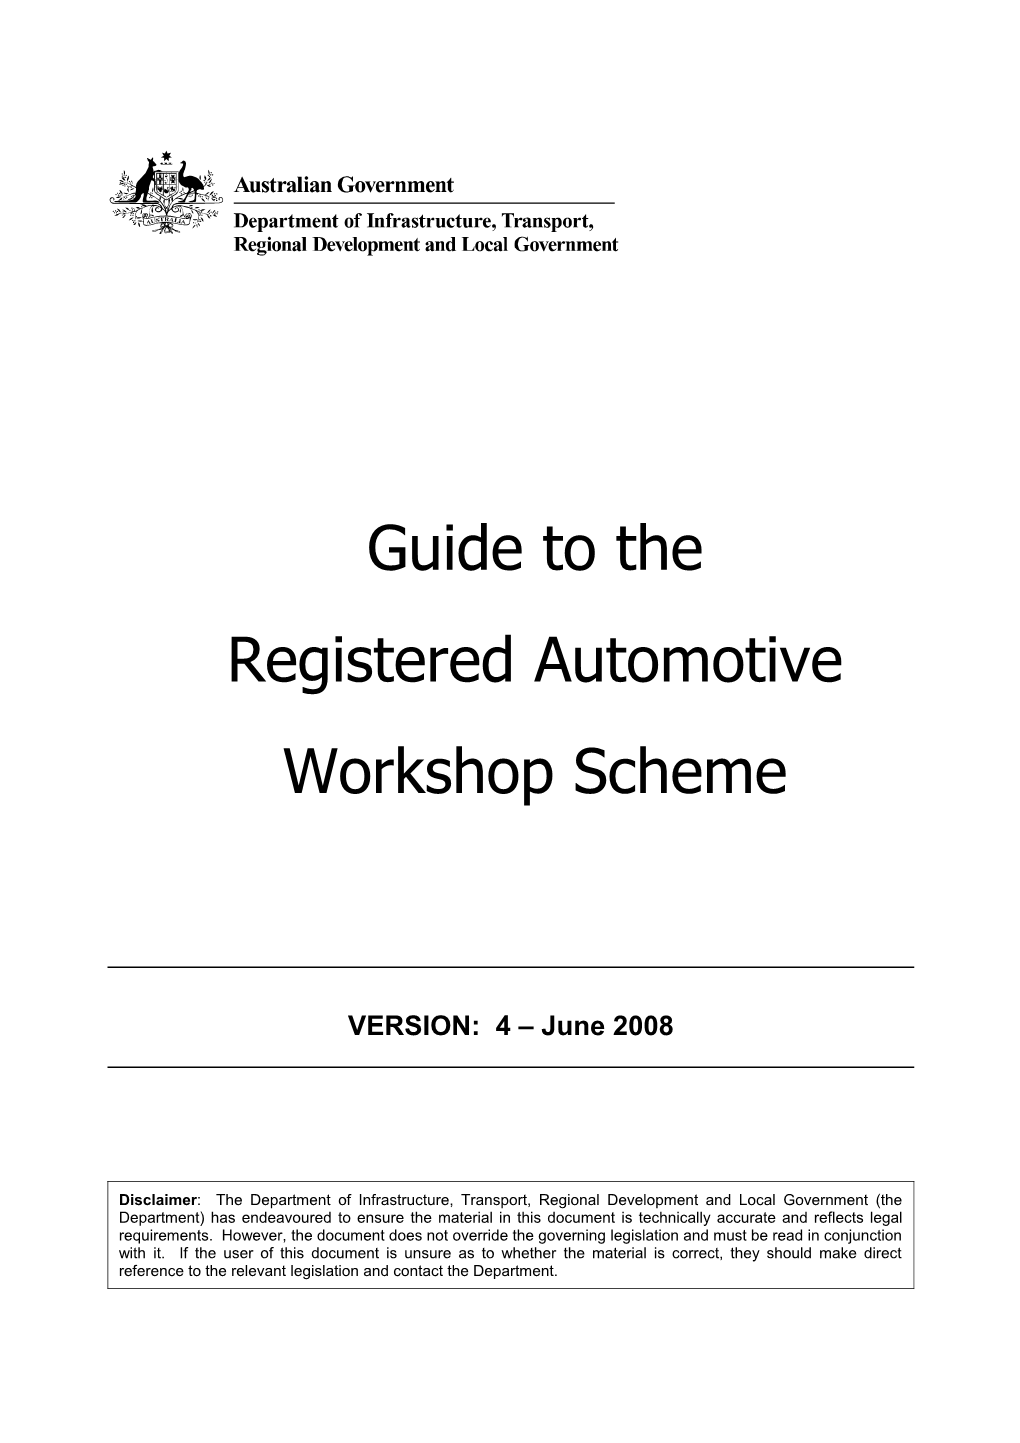 Guide to the Registered Automotive Workshop Scheme 1